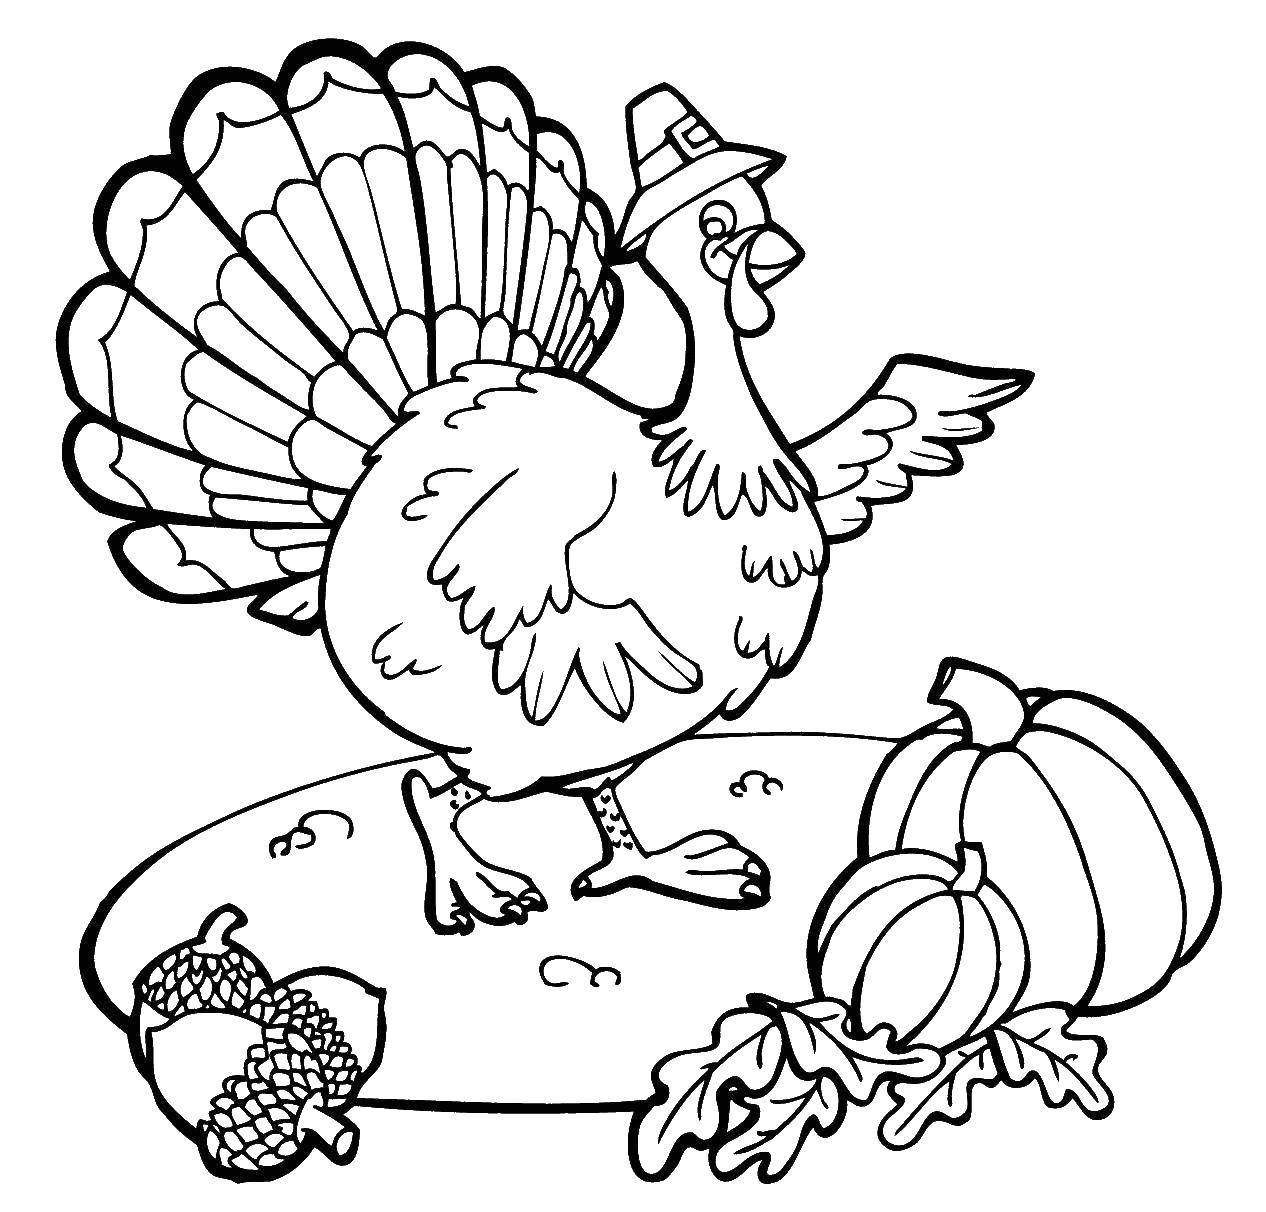 Coloring Turkey. Category birds. Tags:  Turkey.